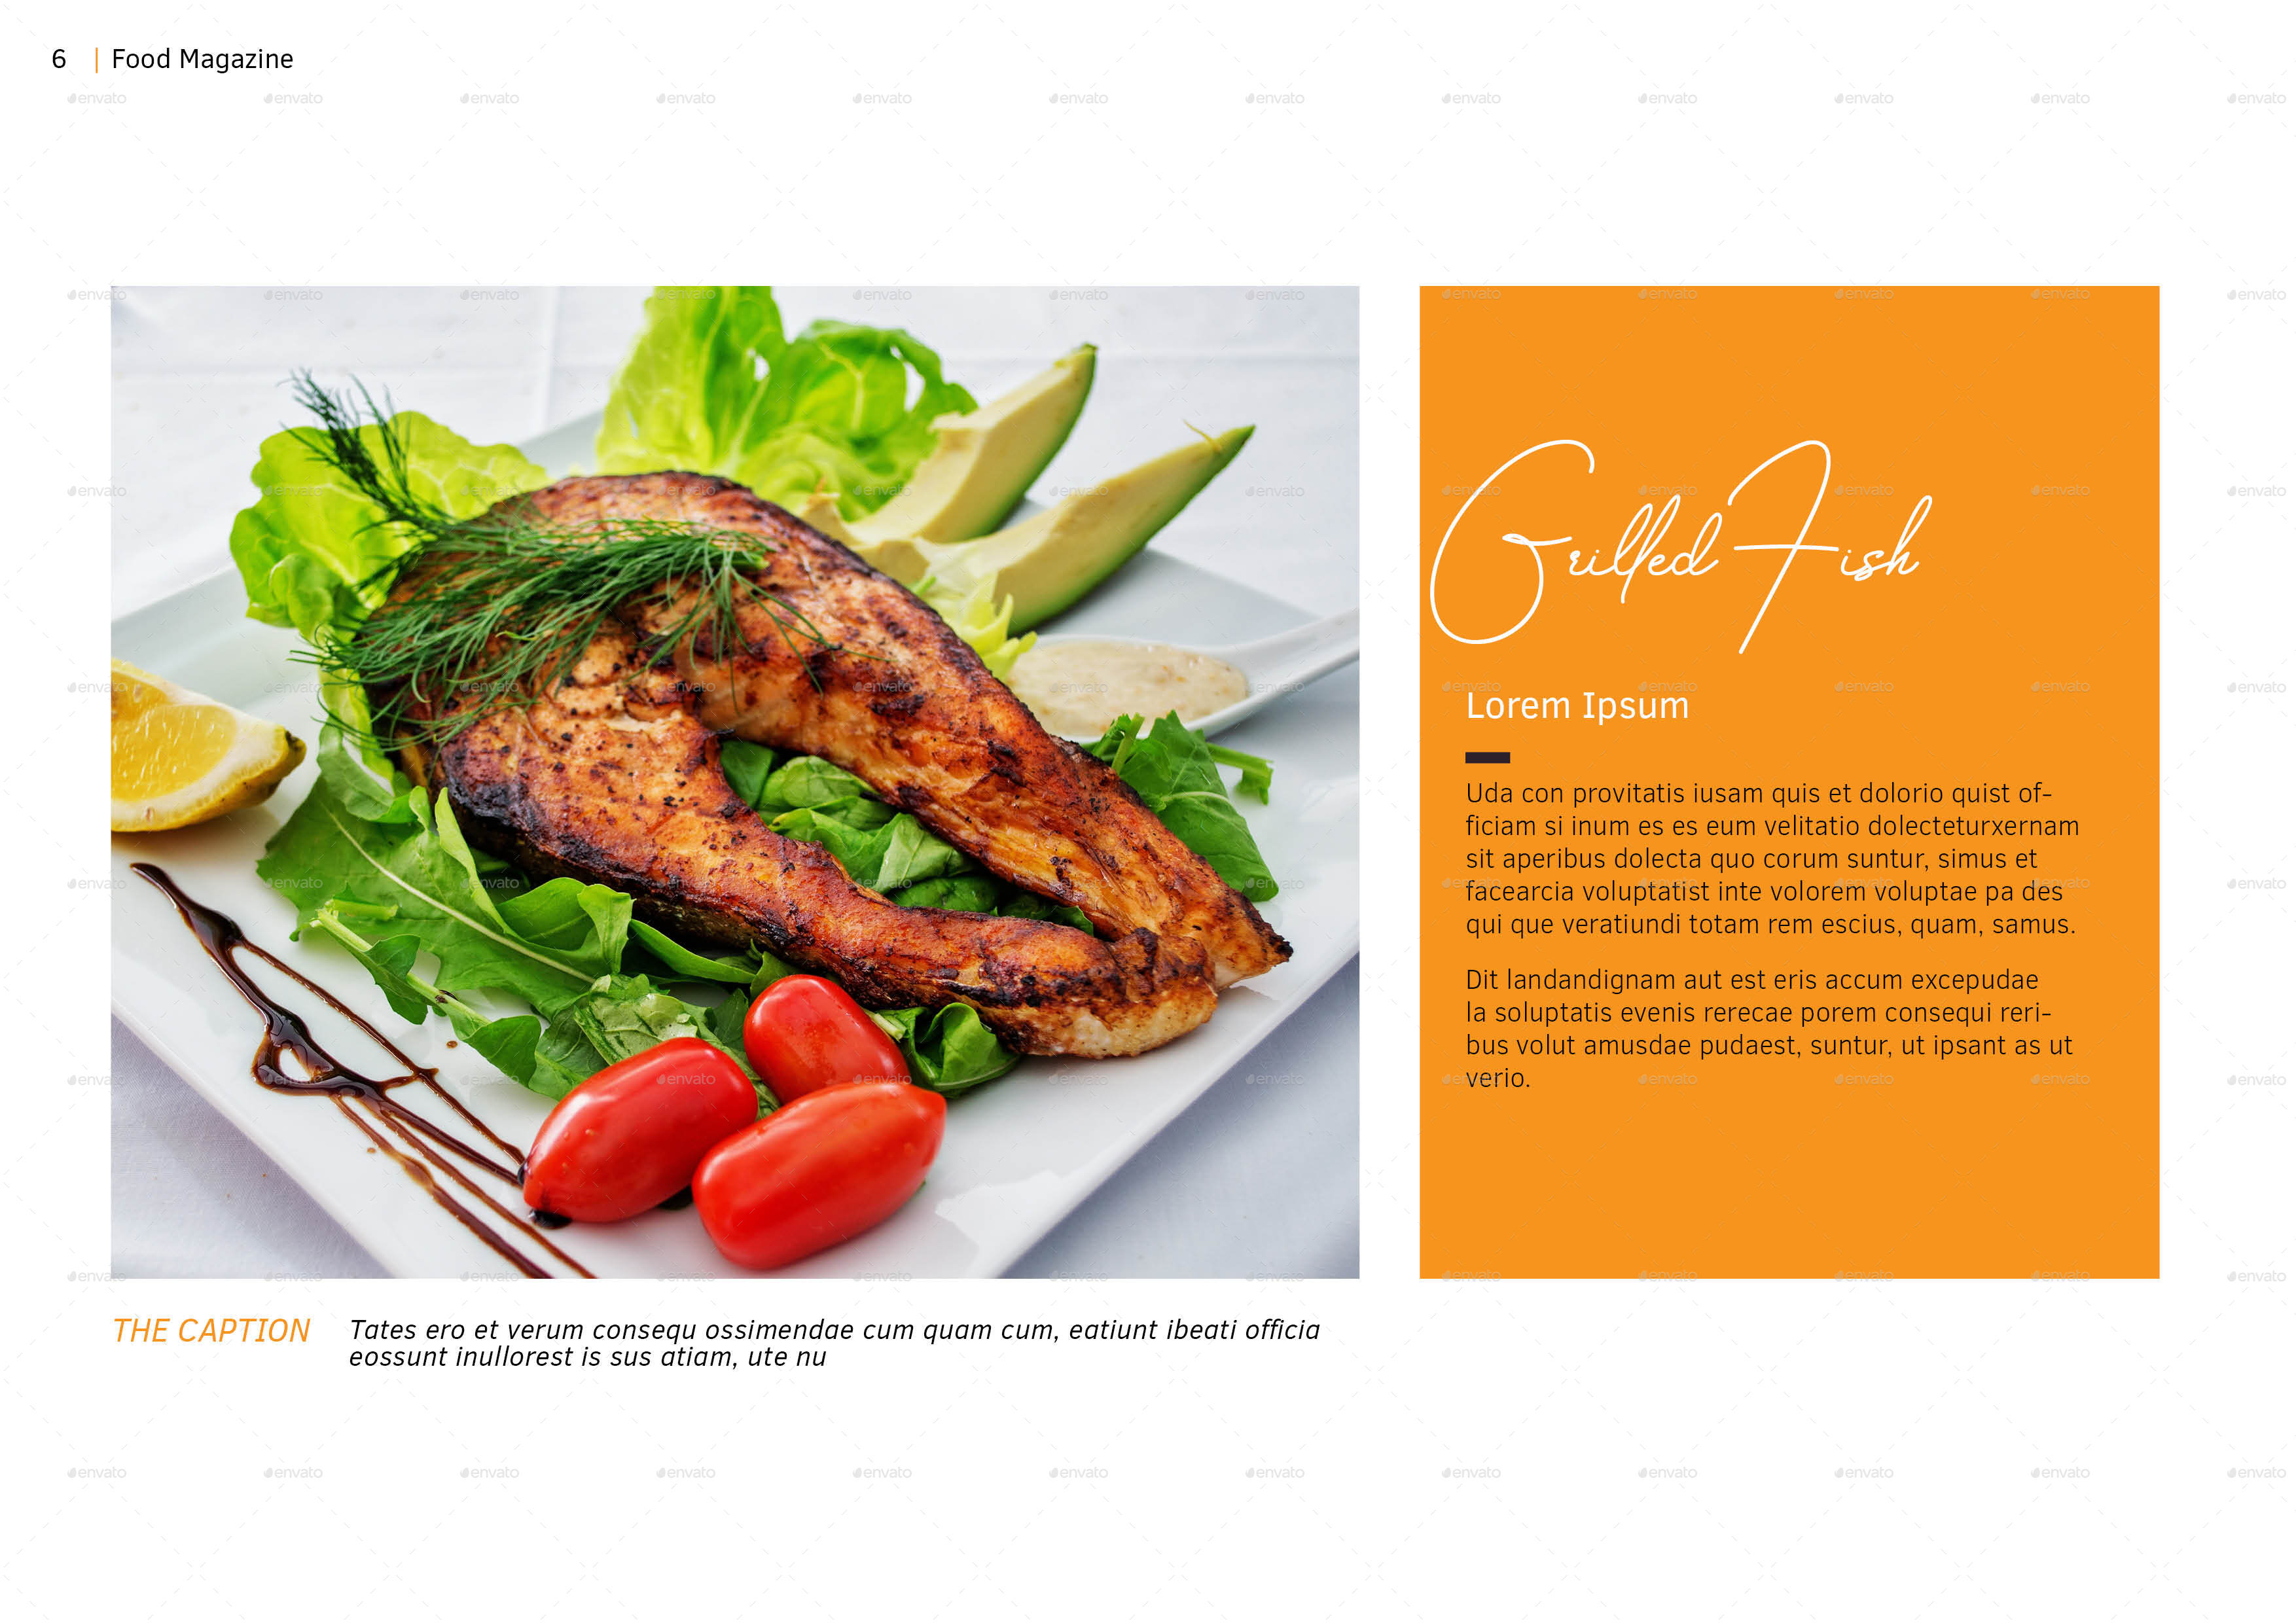 Food Magazine A4 Landscape, Print Templates | GraphicRiver